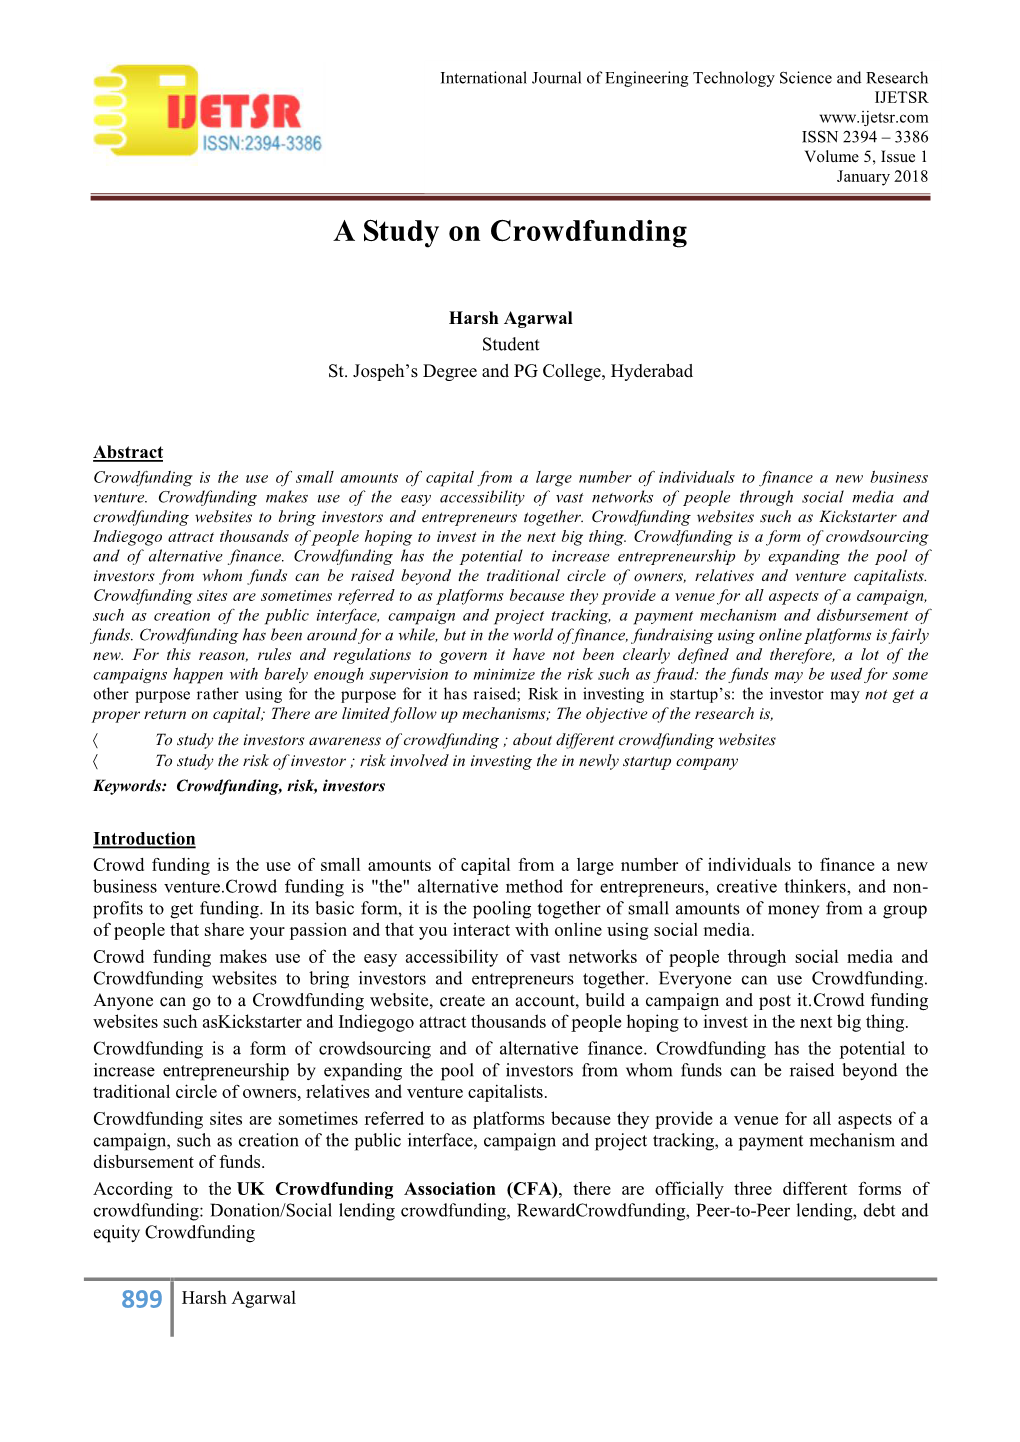 A Study on Crowdfunding